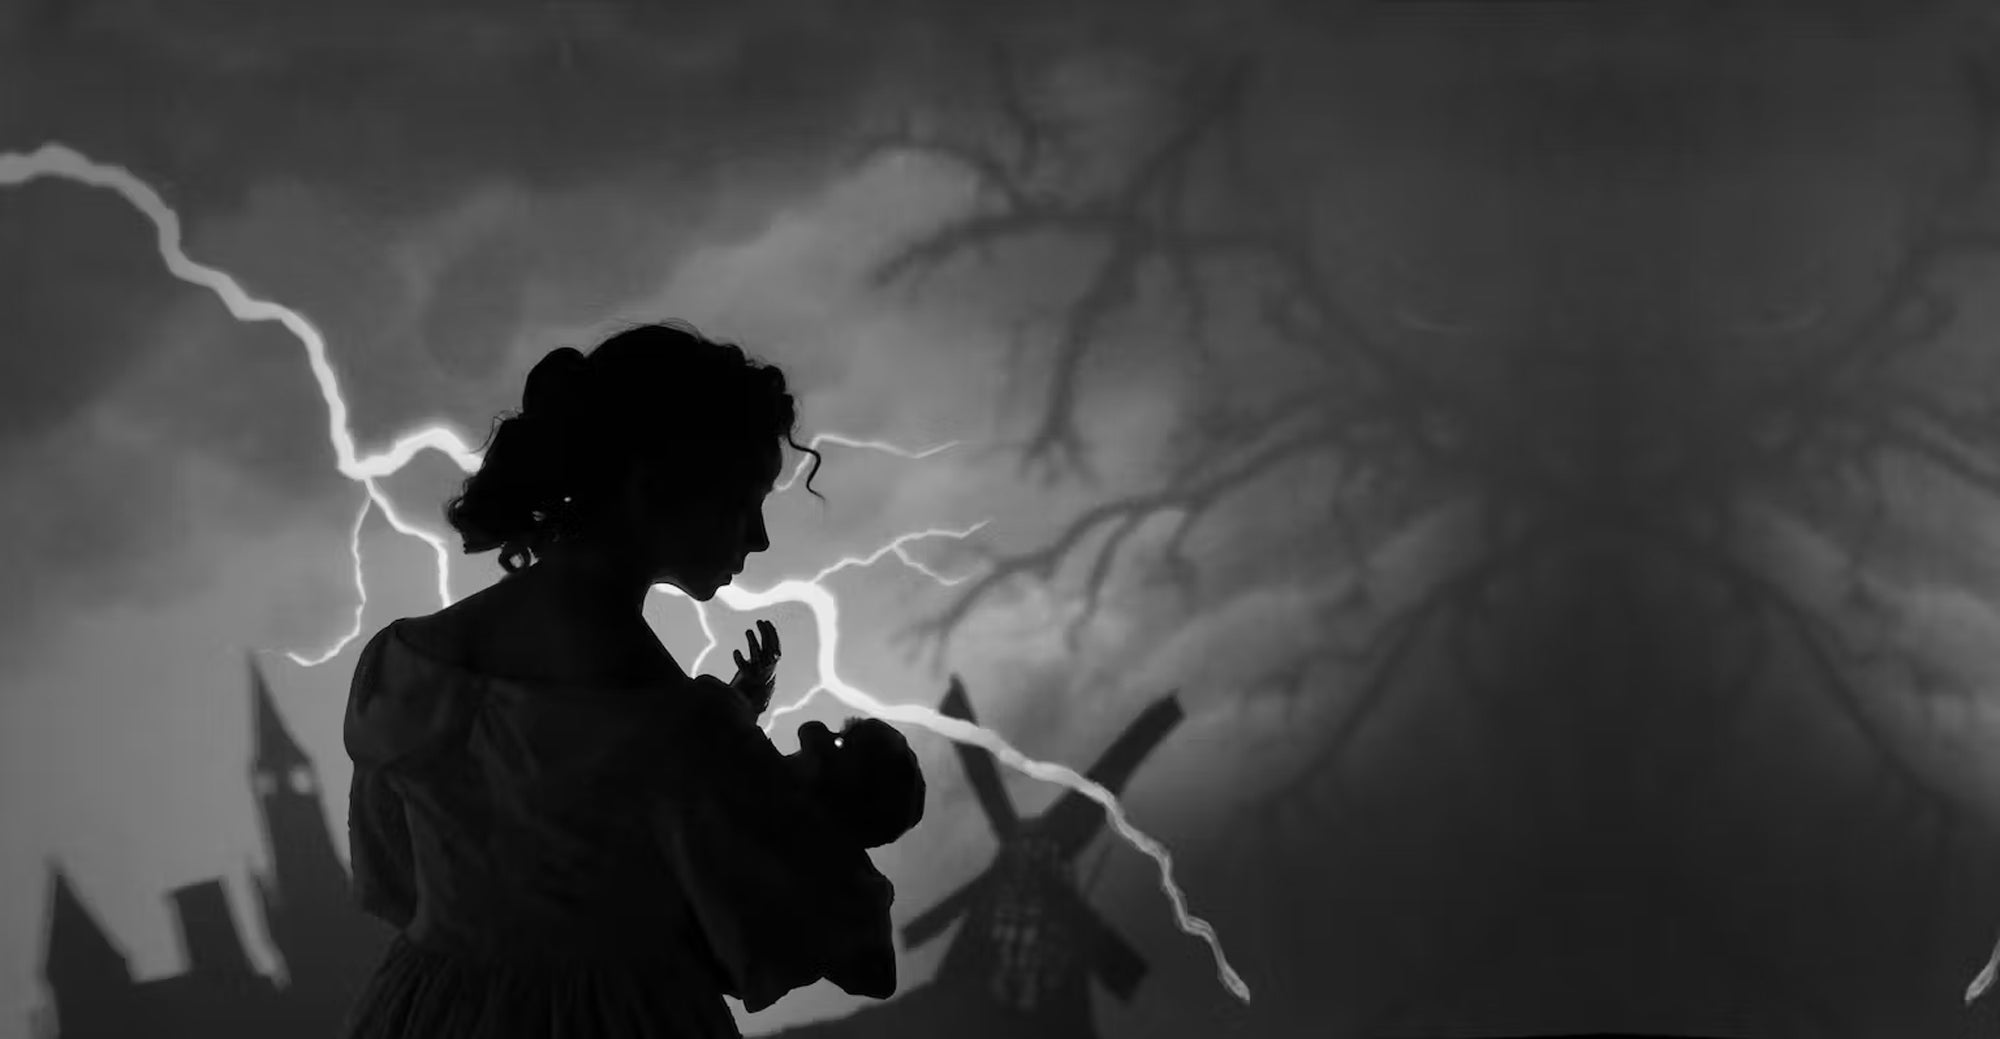 Black-and-white, horror-like image from "Frankenstein," woman holding baby under lightning